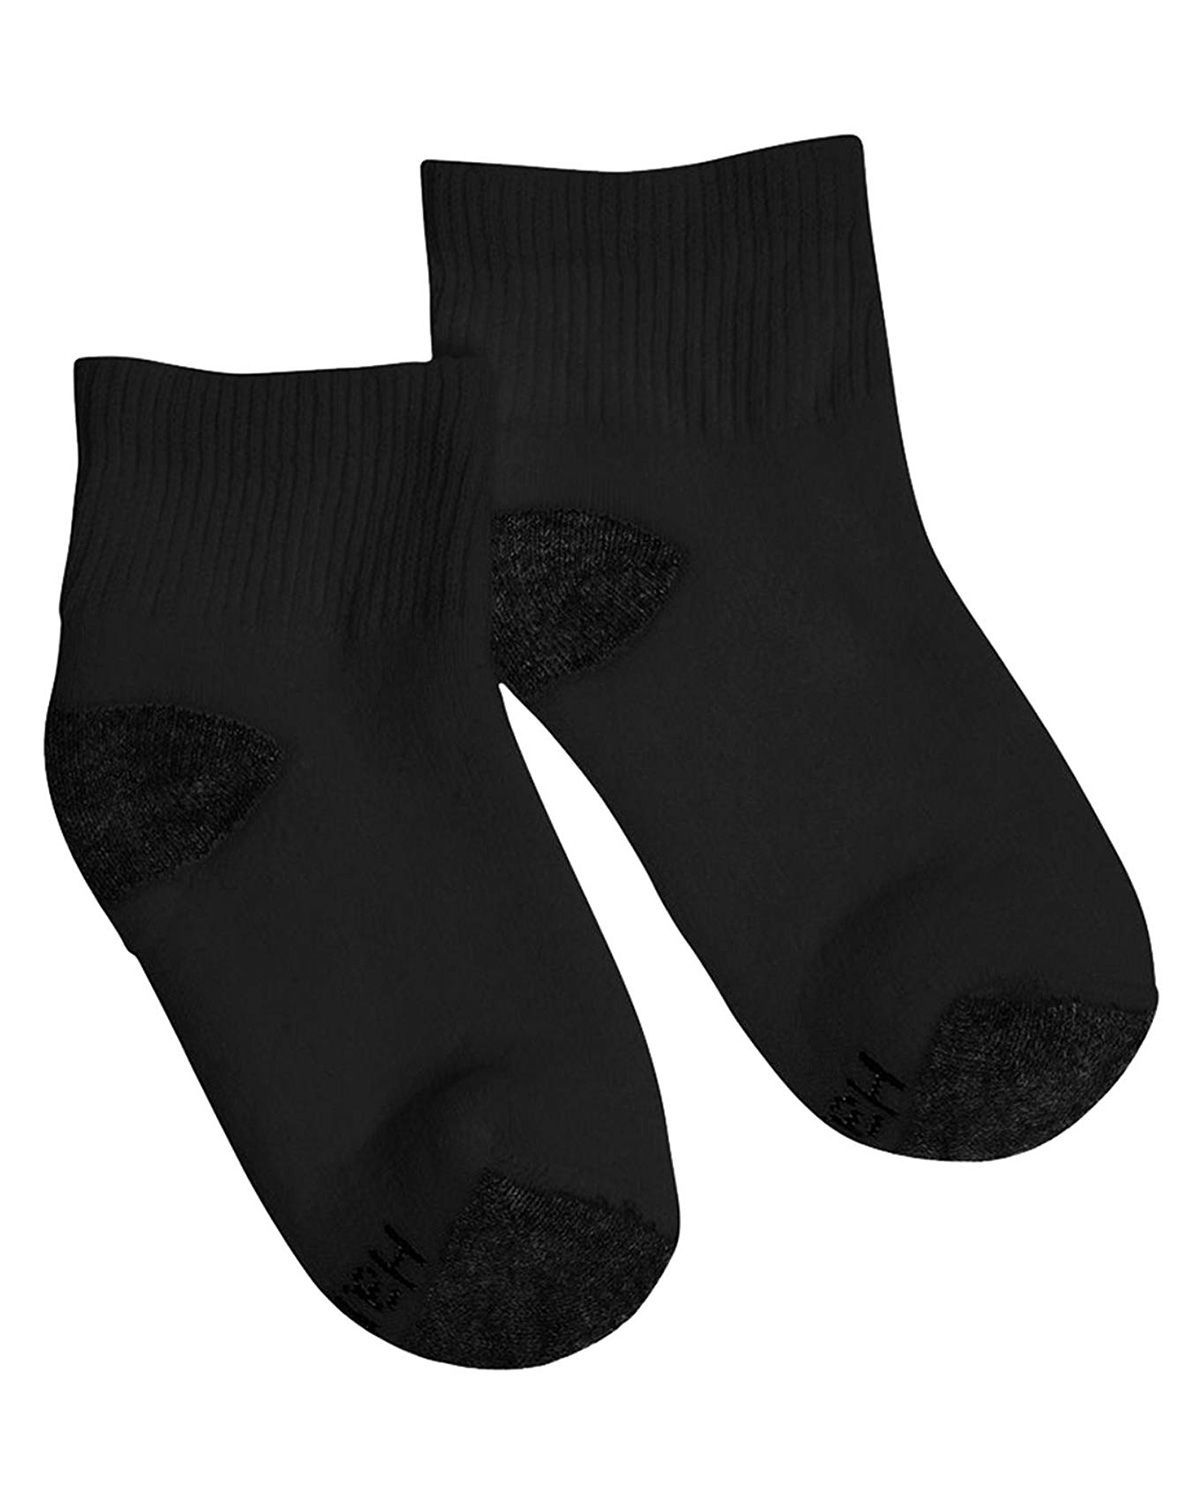 Hanes 432BP6 Boys Ankle ComfortBlend Assorted Black Socks 6-Pack